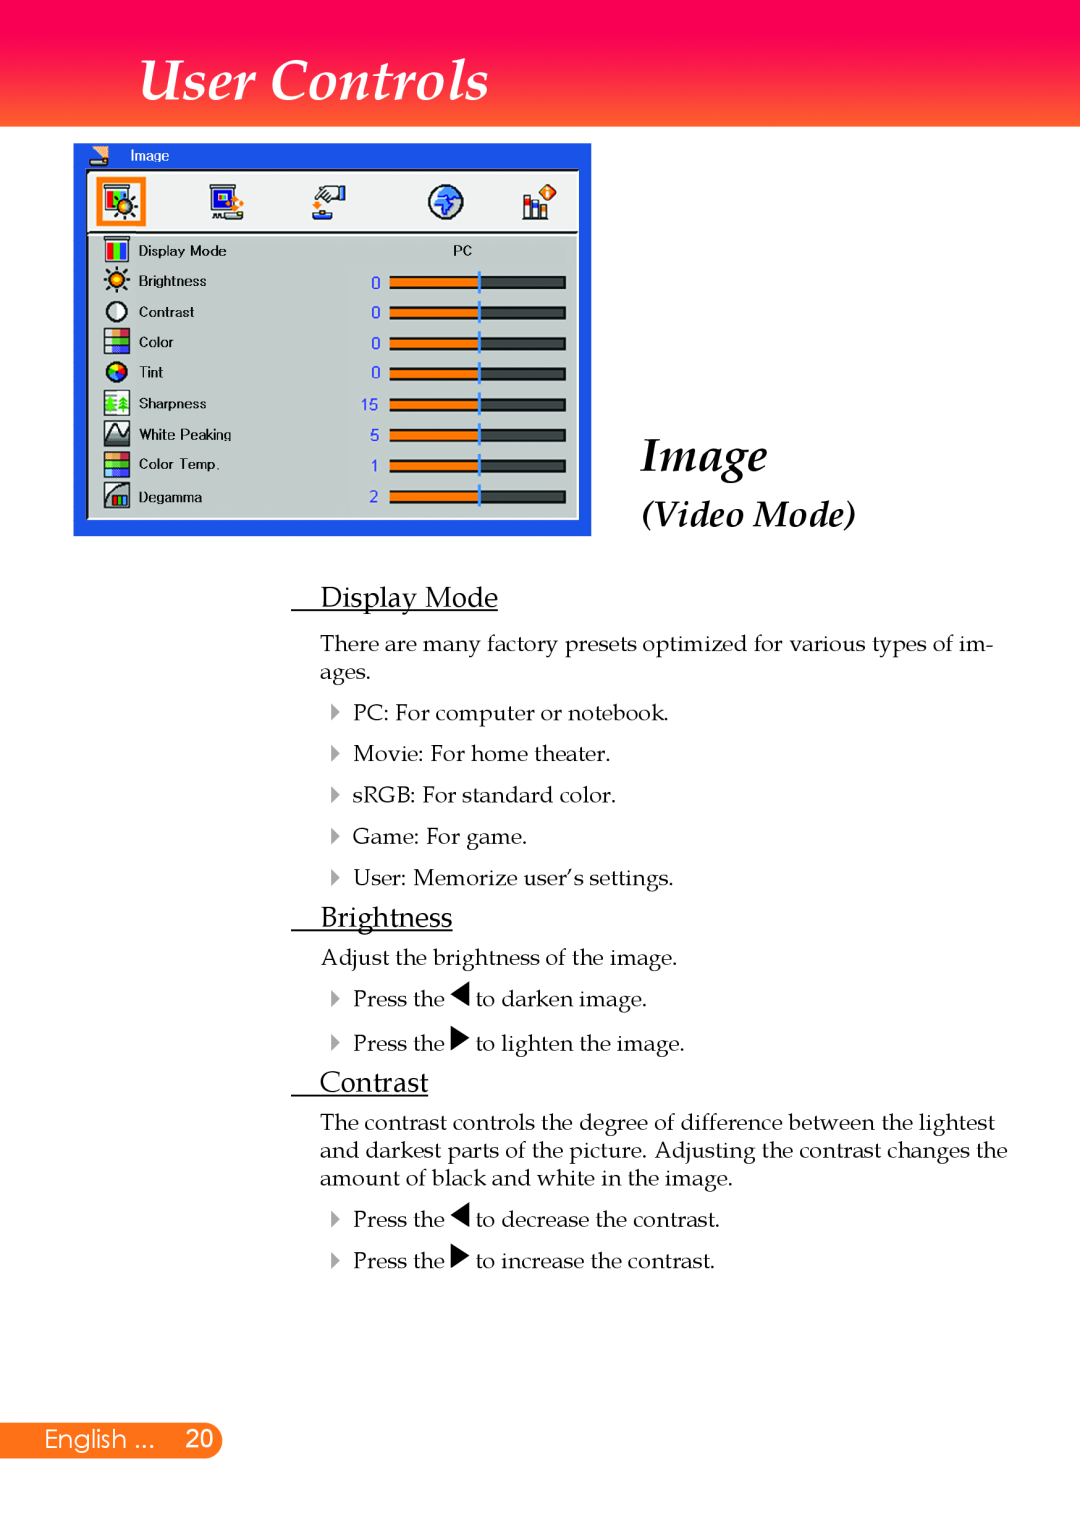 InFocus X7, X6 manual Video Mode, User Controls, Image, Display Mode, Brightness, Contrast, English 